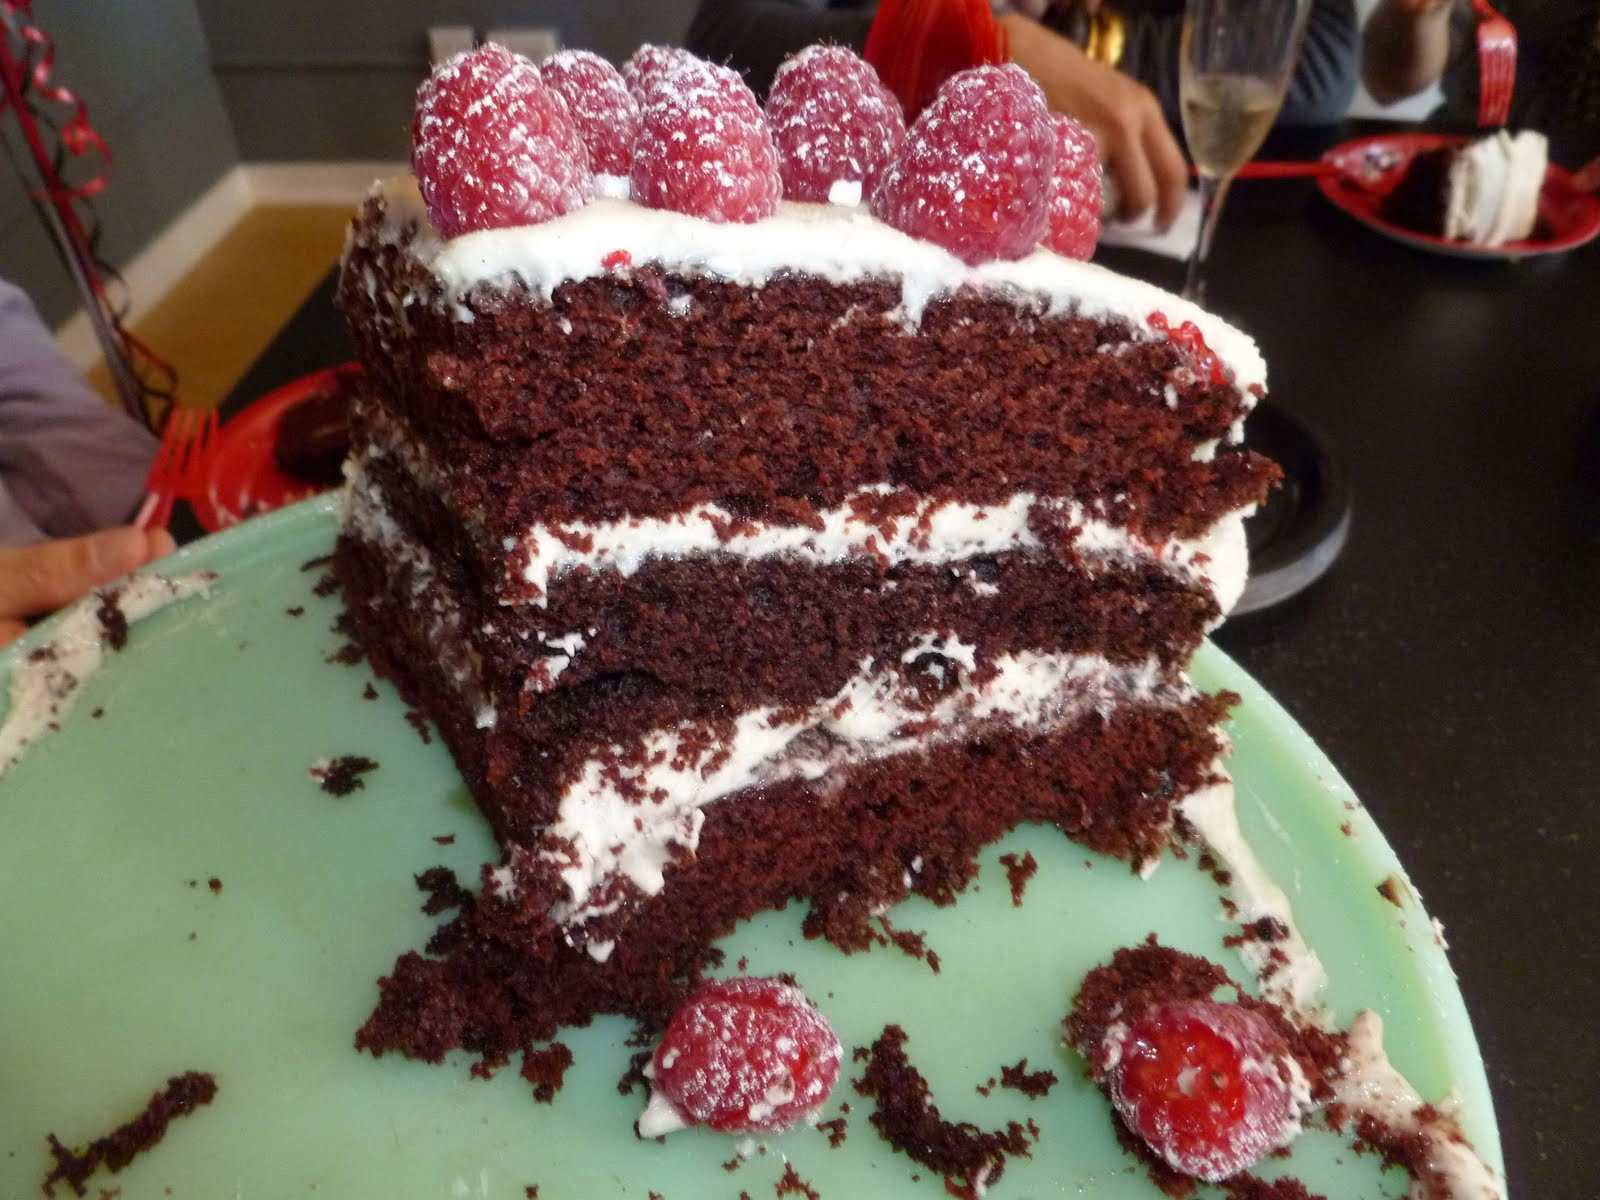 Best ideas about Vegetarian Birthday Cake Recipes
. Save or Pin Savvy Vegan Homemade Vegan Birthday Cakes Now.